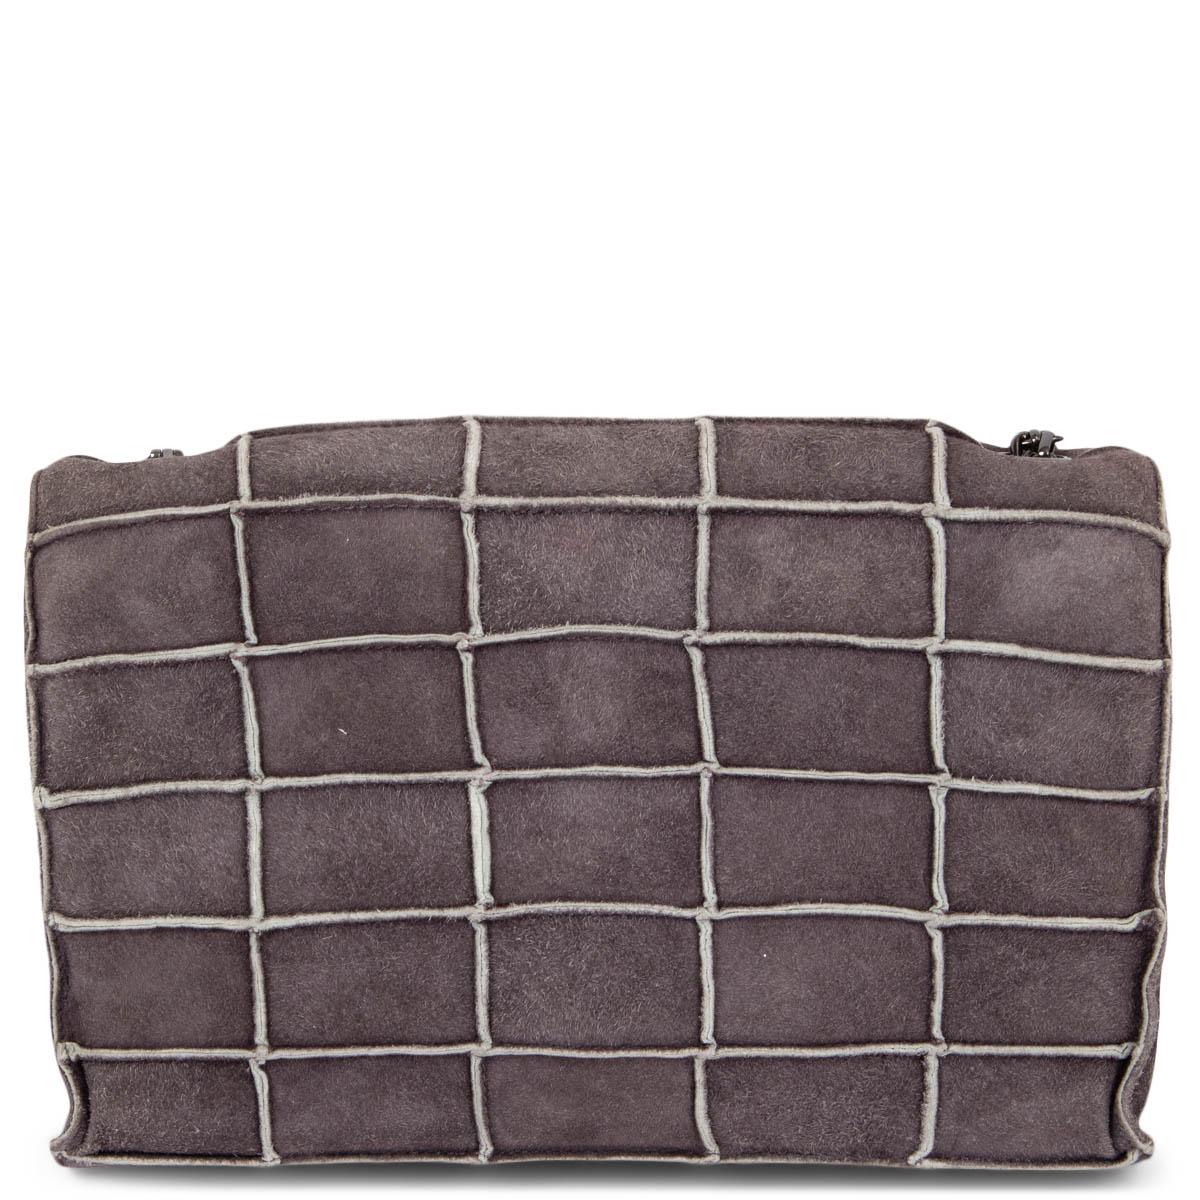 Women's CHANEL grey suede 1997-99 255 REISSUE PATCHWORK FLAP Shoulder Bag For Sale